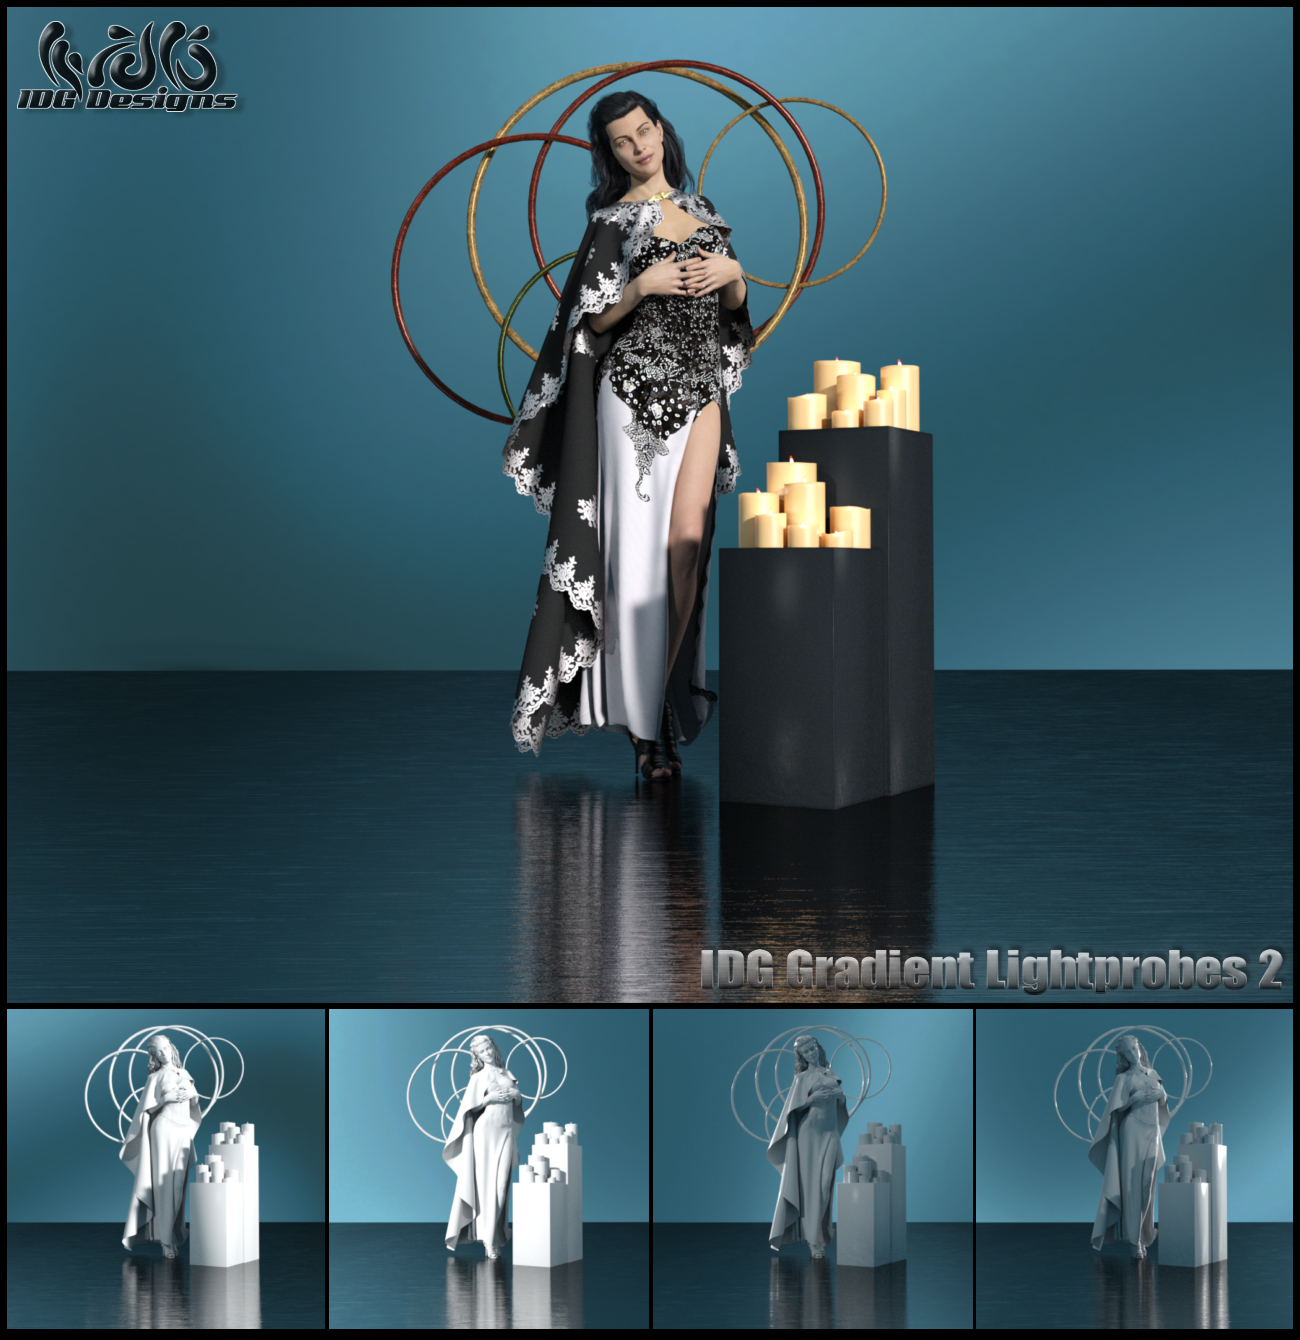 IDG Gradient Lights 2 by: IDG DesignsDestinysGardenInaneGlory, 3D Models by Daz 3D